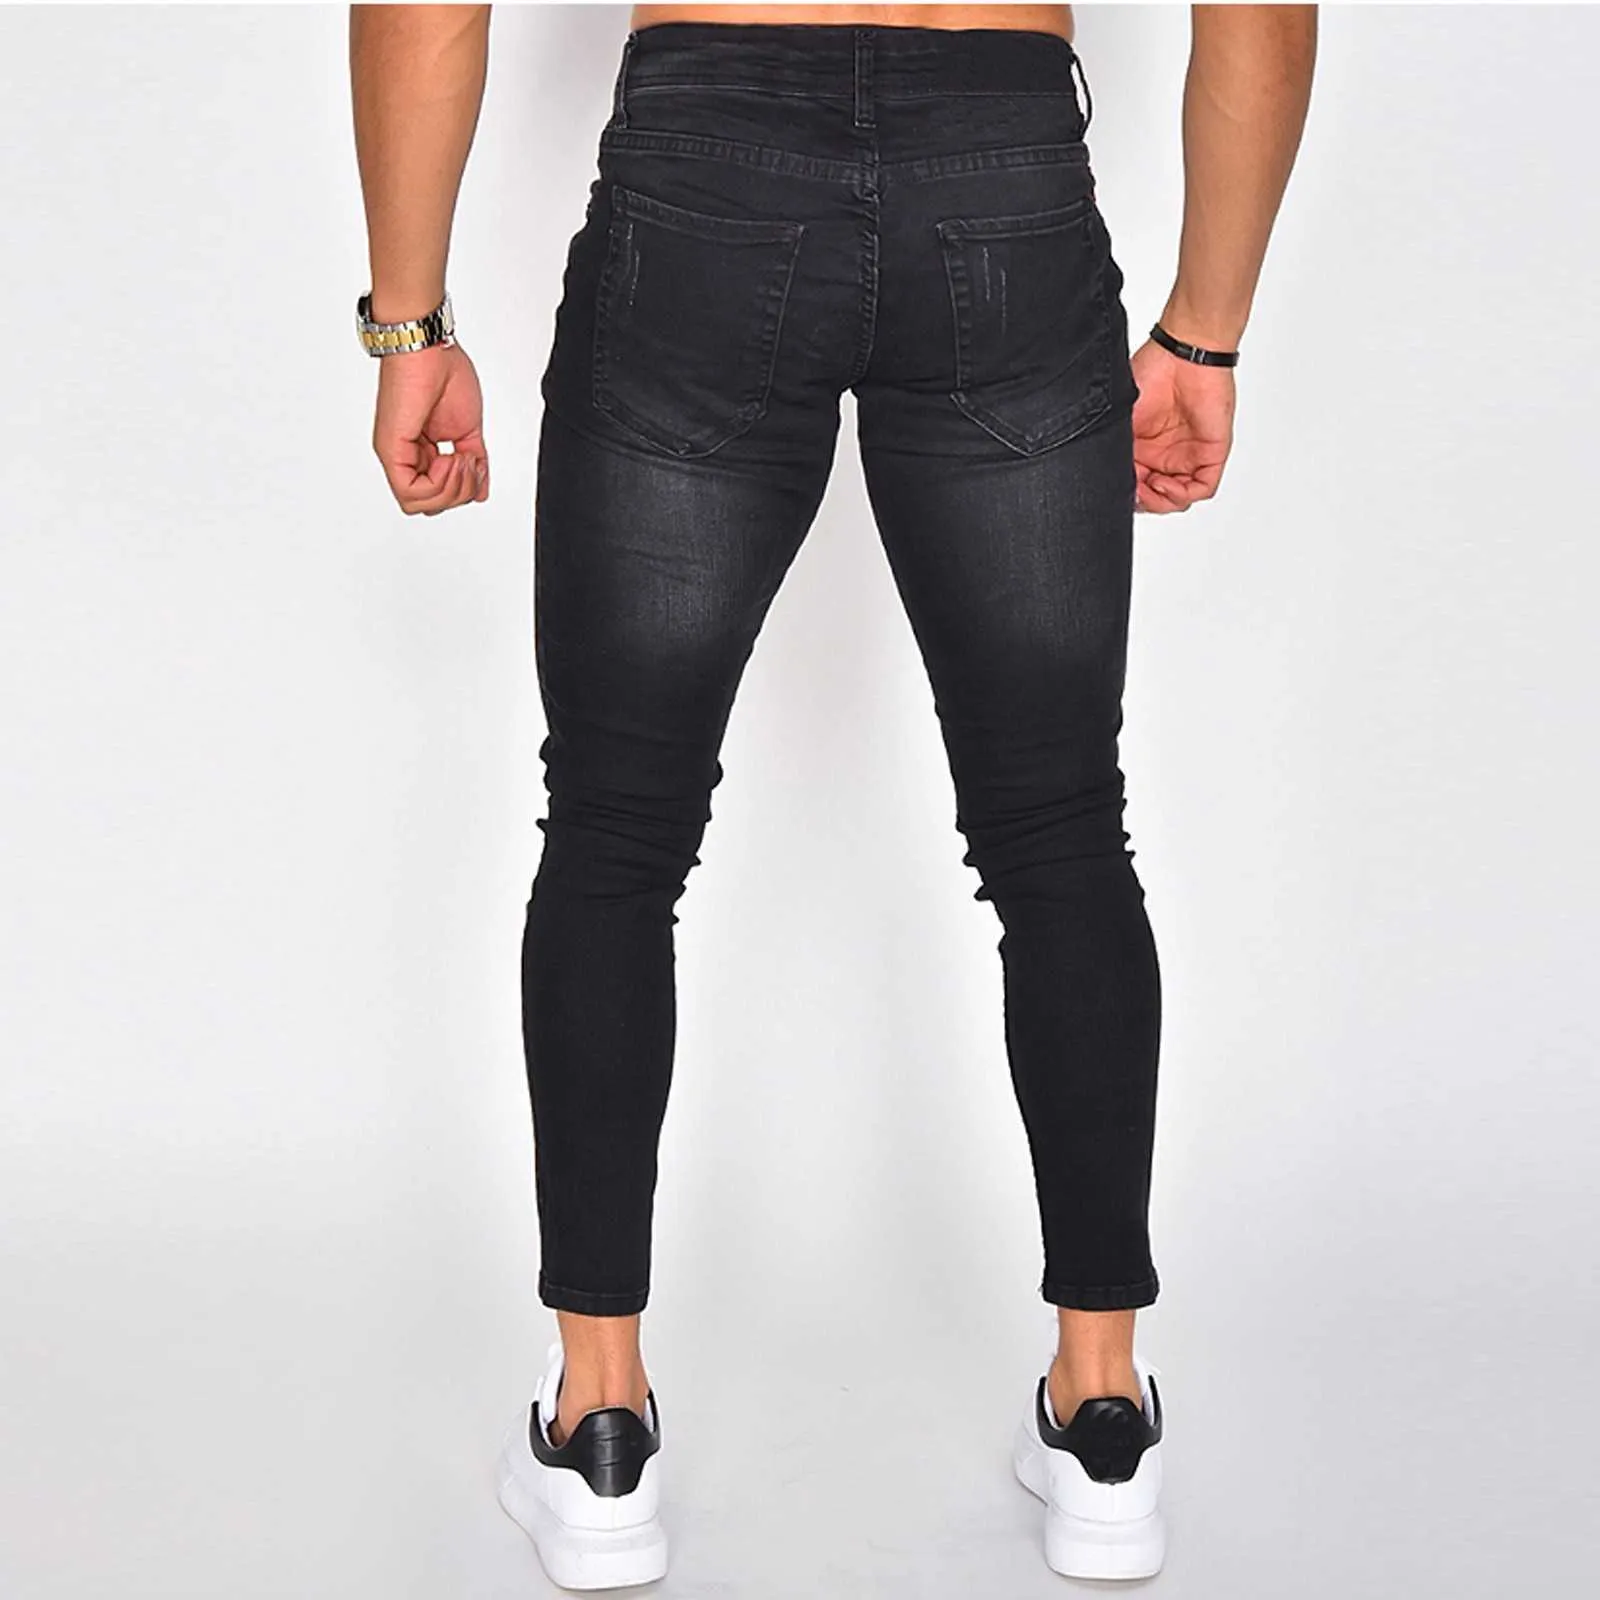 Fashion Men Zipper Denim Ripped Hole Vintage Casual Slim Stretch High Waist Hip Hop Trousers Skinny Jeans Pants Large Size#35 X0621